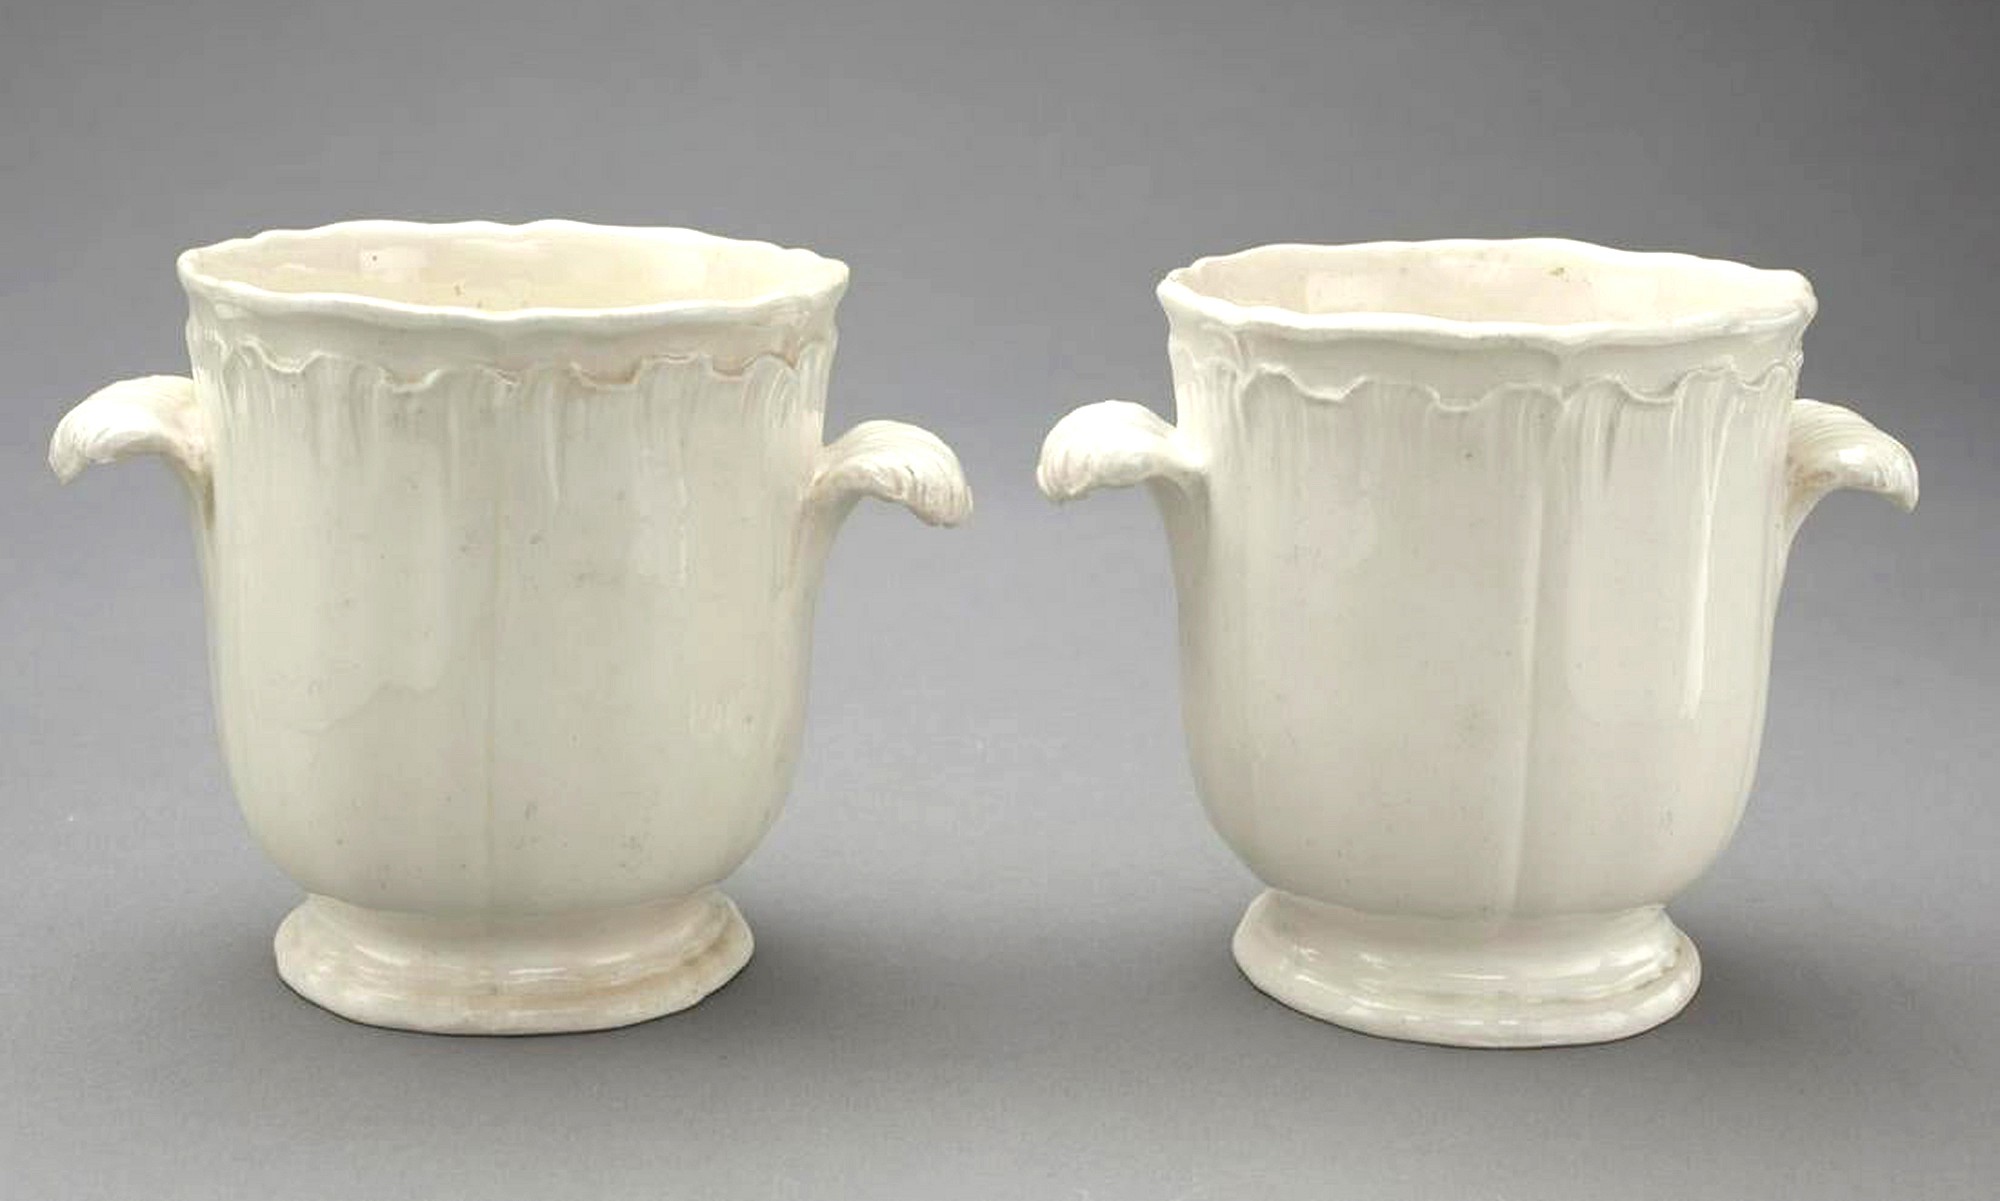 Pair of Antique Cloisonne Spice Jars, English Ceramic, Decorative Pot,  Victorian For Sale at 1stDibs